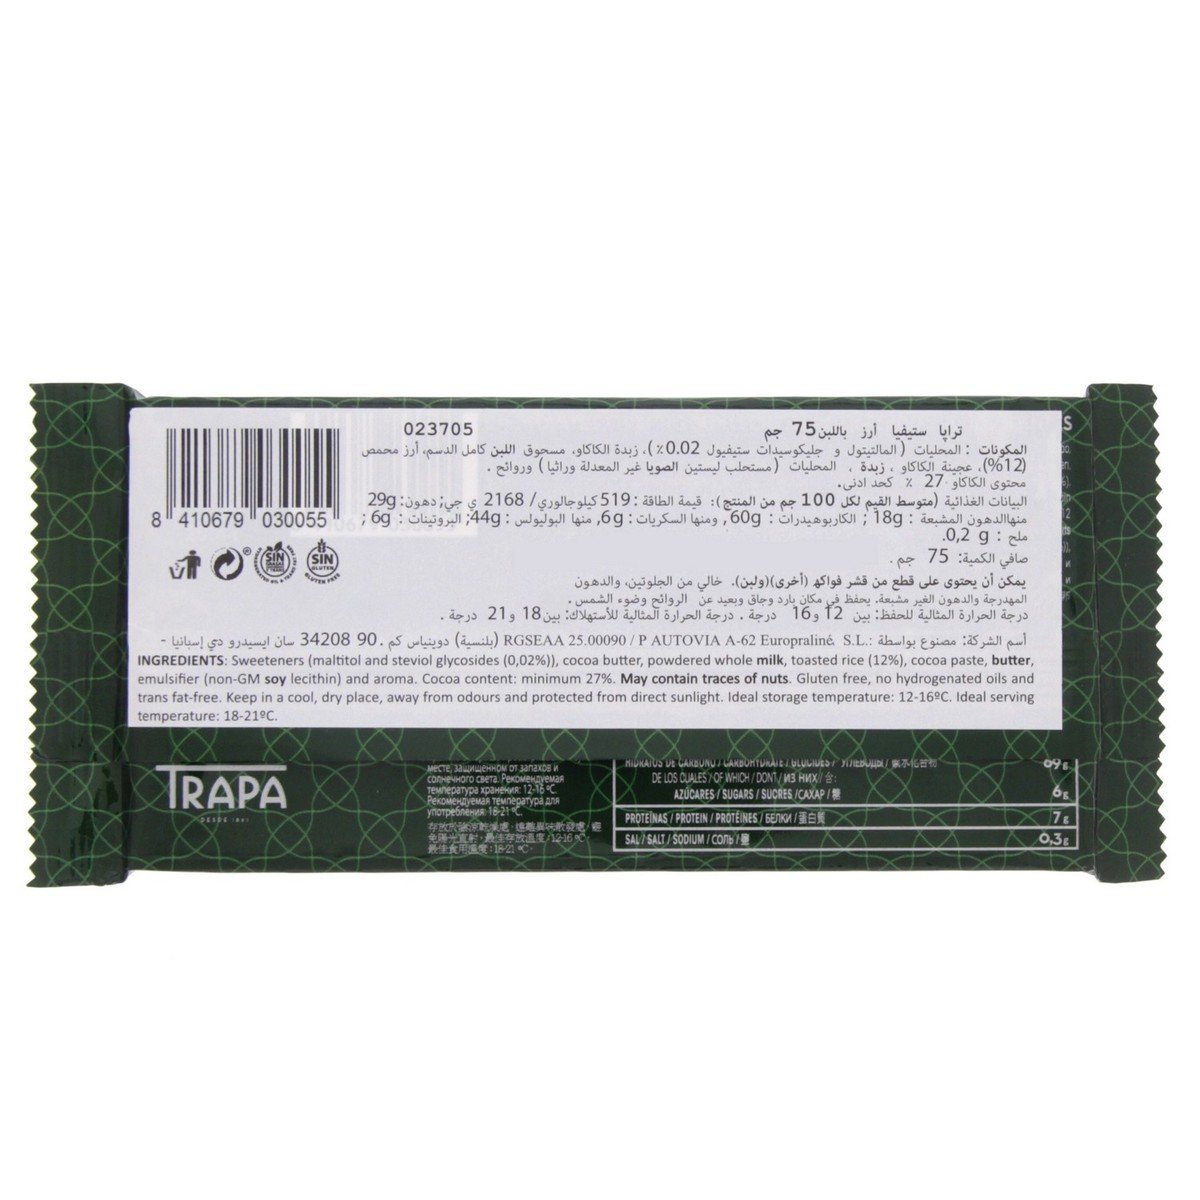 Trapa Stevia Crunchy  Chocolate Bar 75 Gm